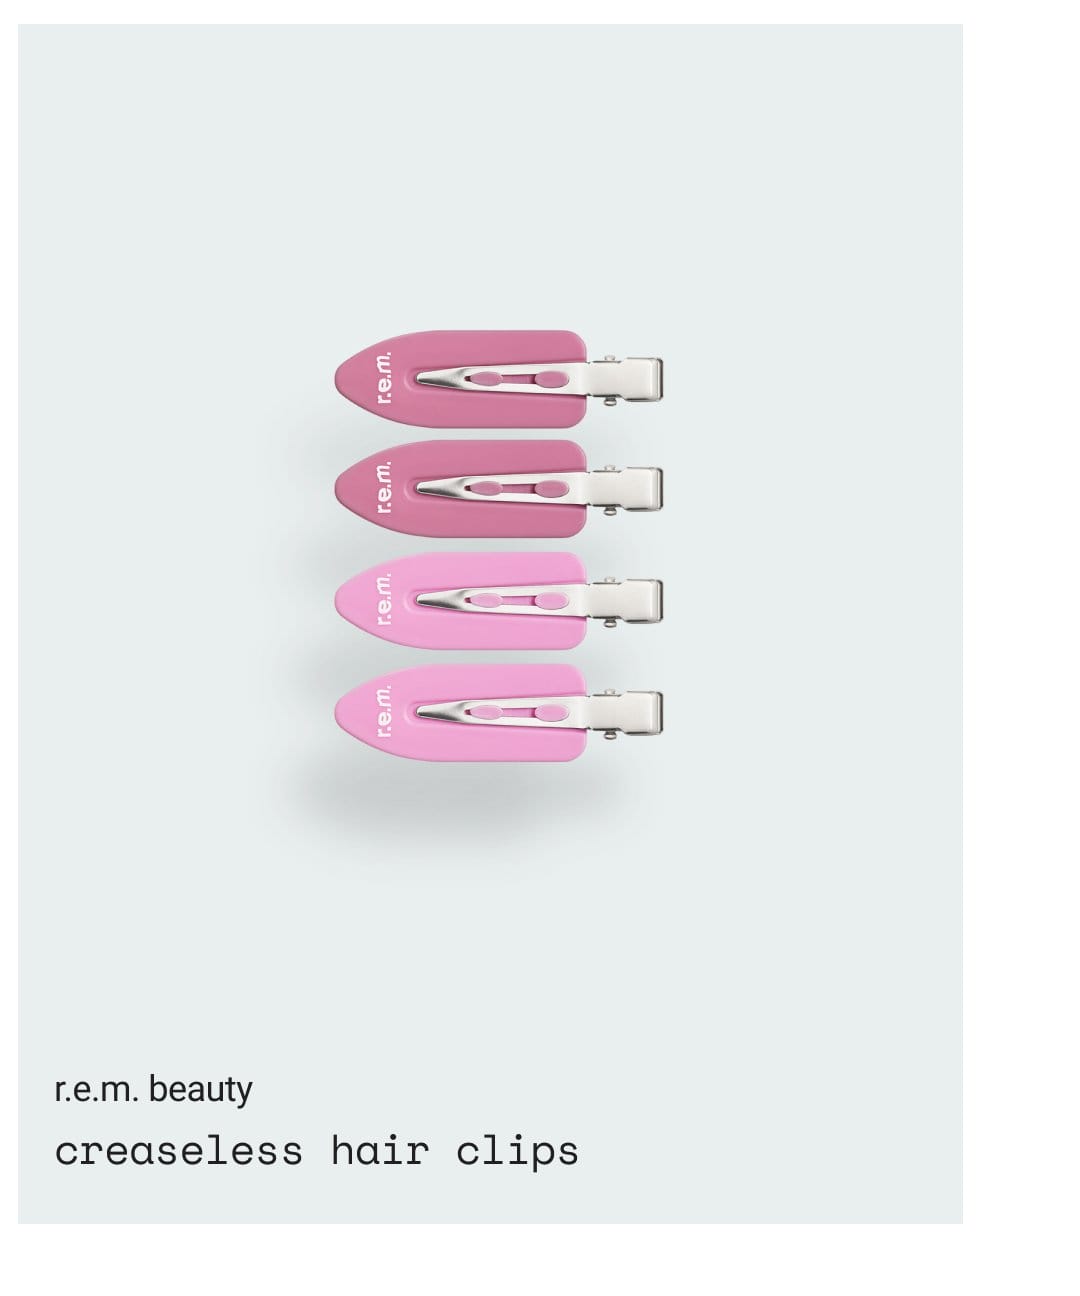 r.e.m. beauty creaseless hair clips